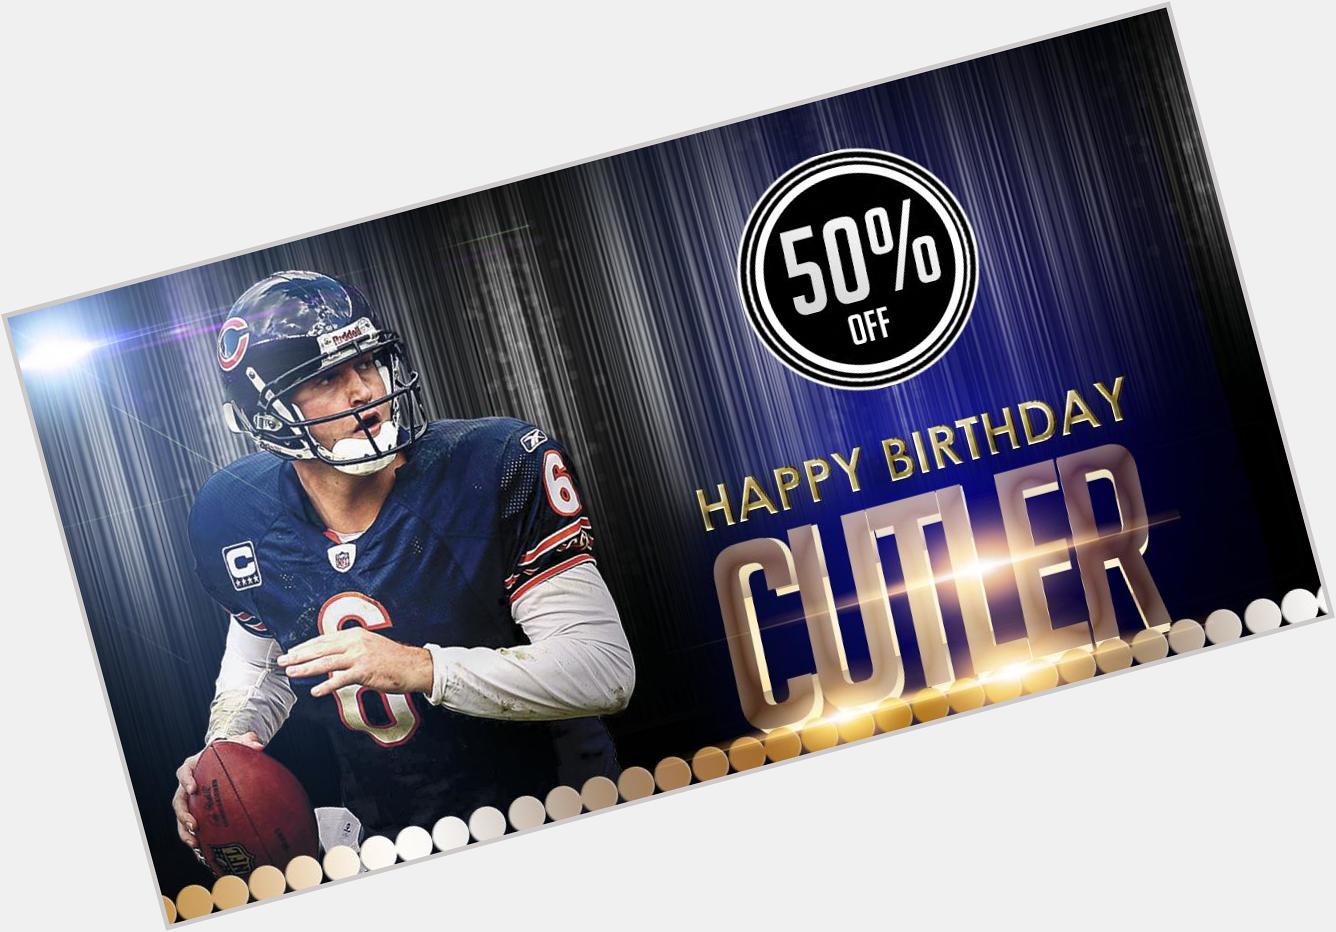 HAPPY BIRTHDAY CUTLER! TAKE 50% OFF ALL JAY CUTLER FOOTBALL CARDS!  